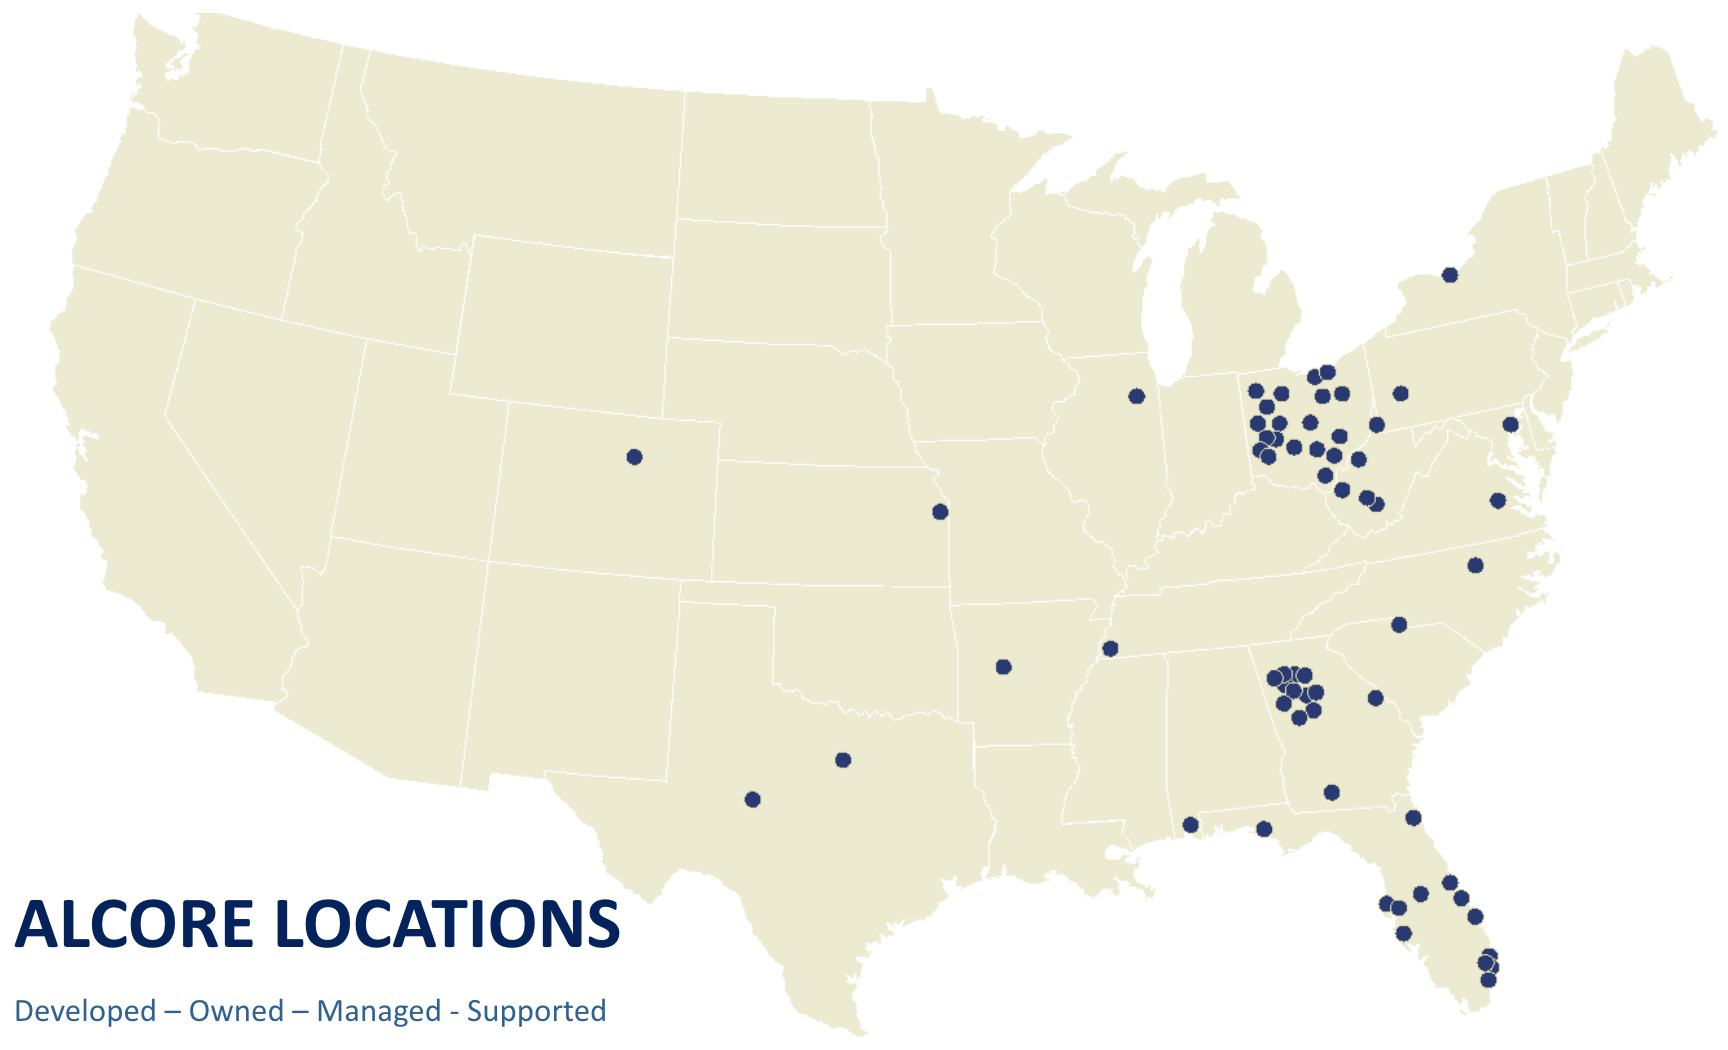 Alcore Senior project locations map.